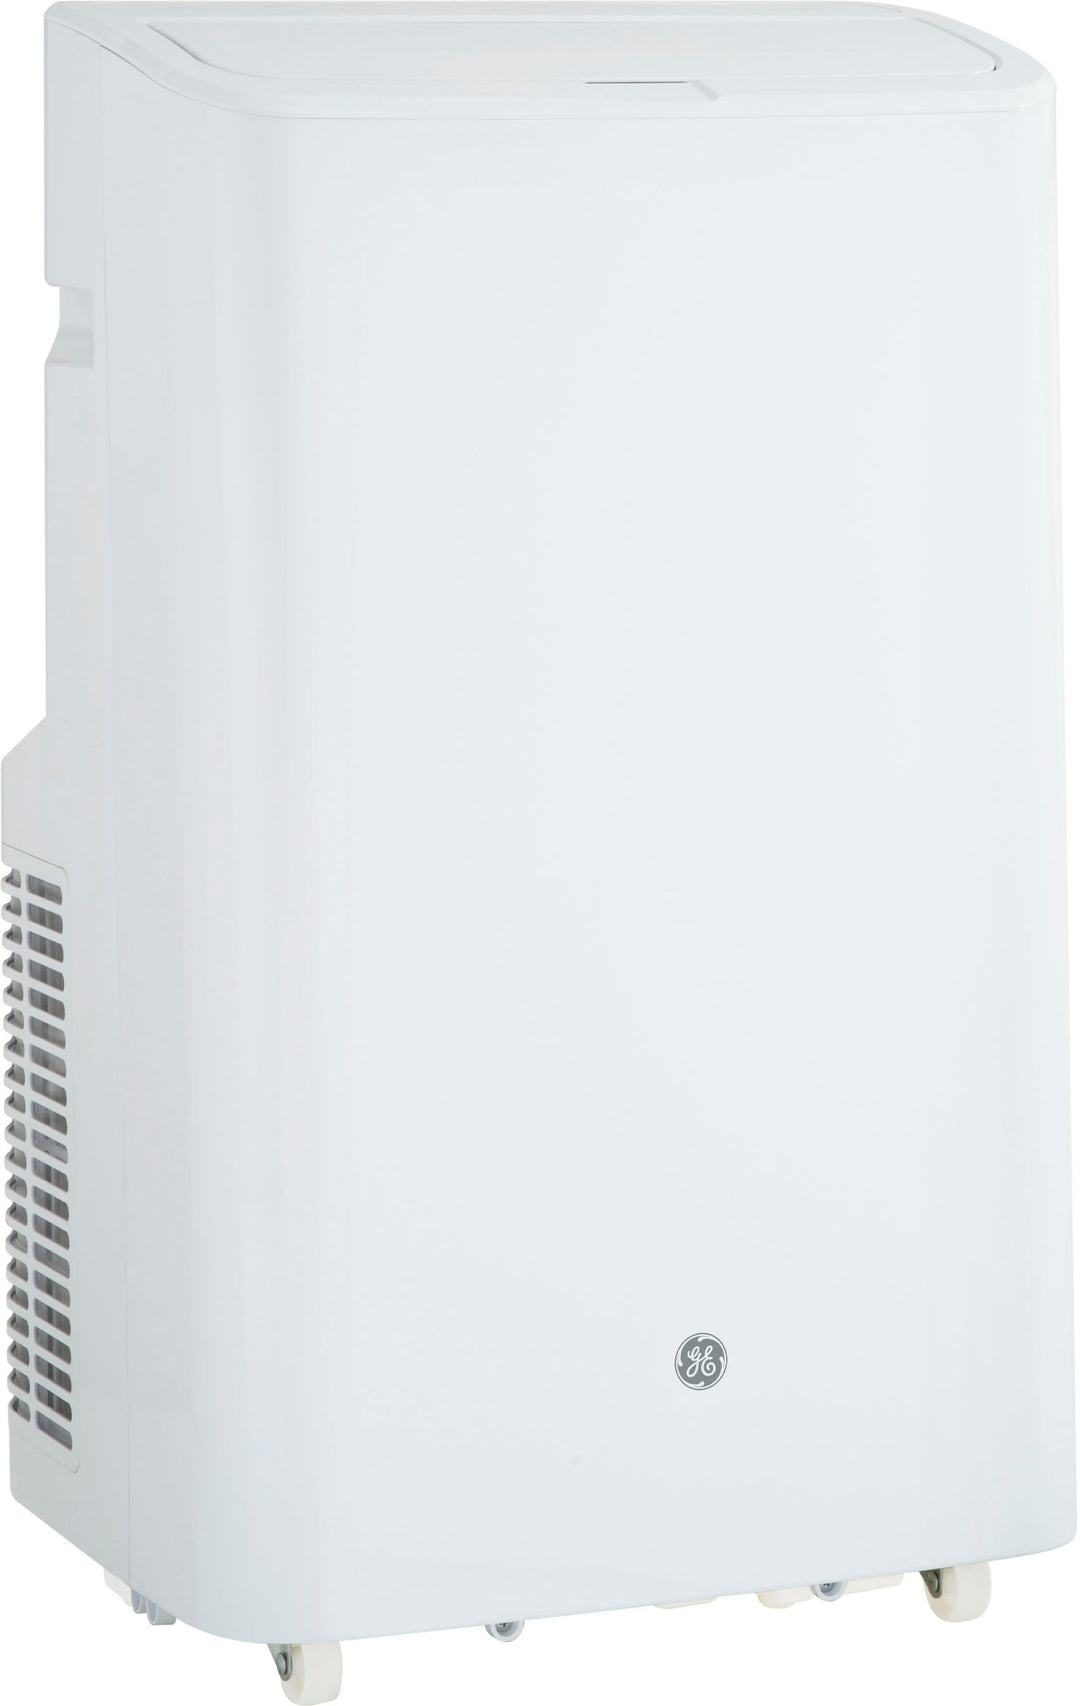 GE - 350 Sq. Ft. 8100 BTU Smart Portable Air Conditioner - White_0